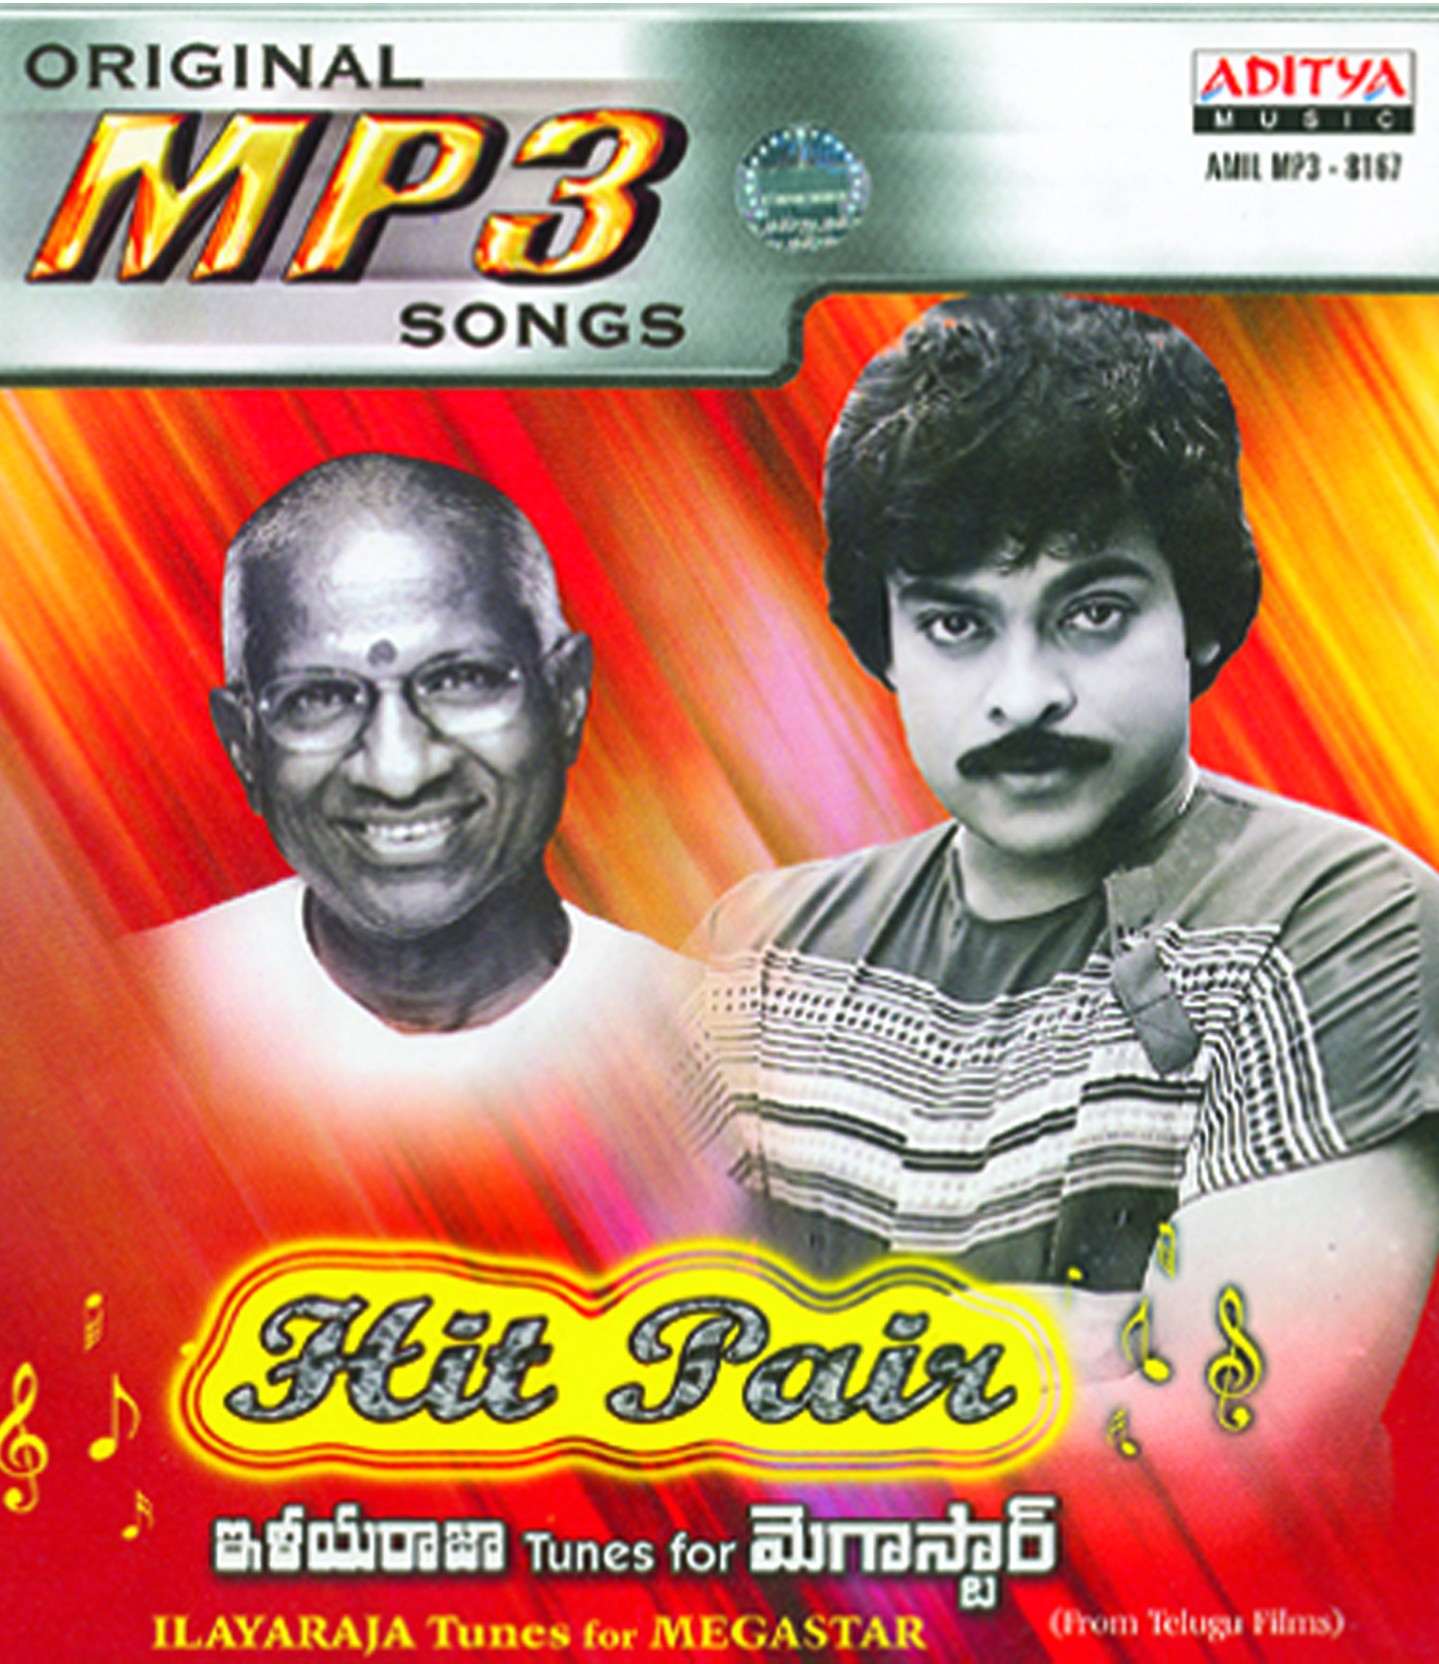 ilayaraja songs mp3 free download